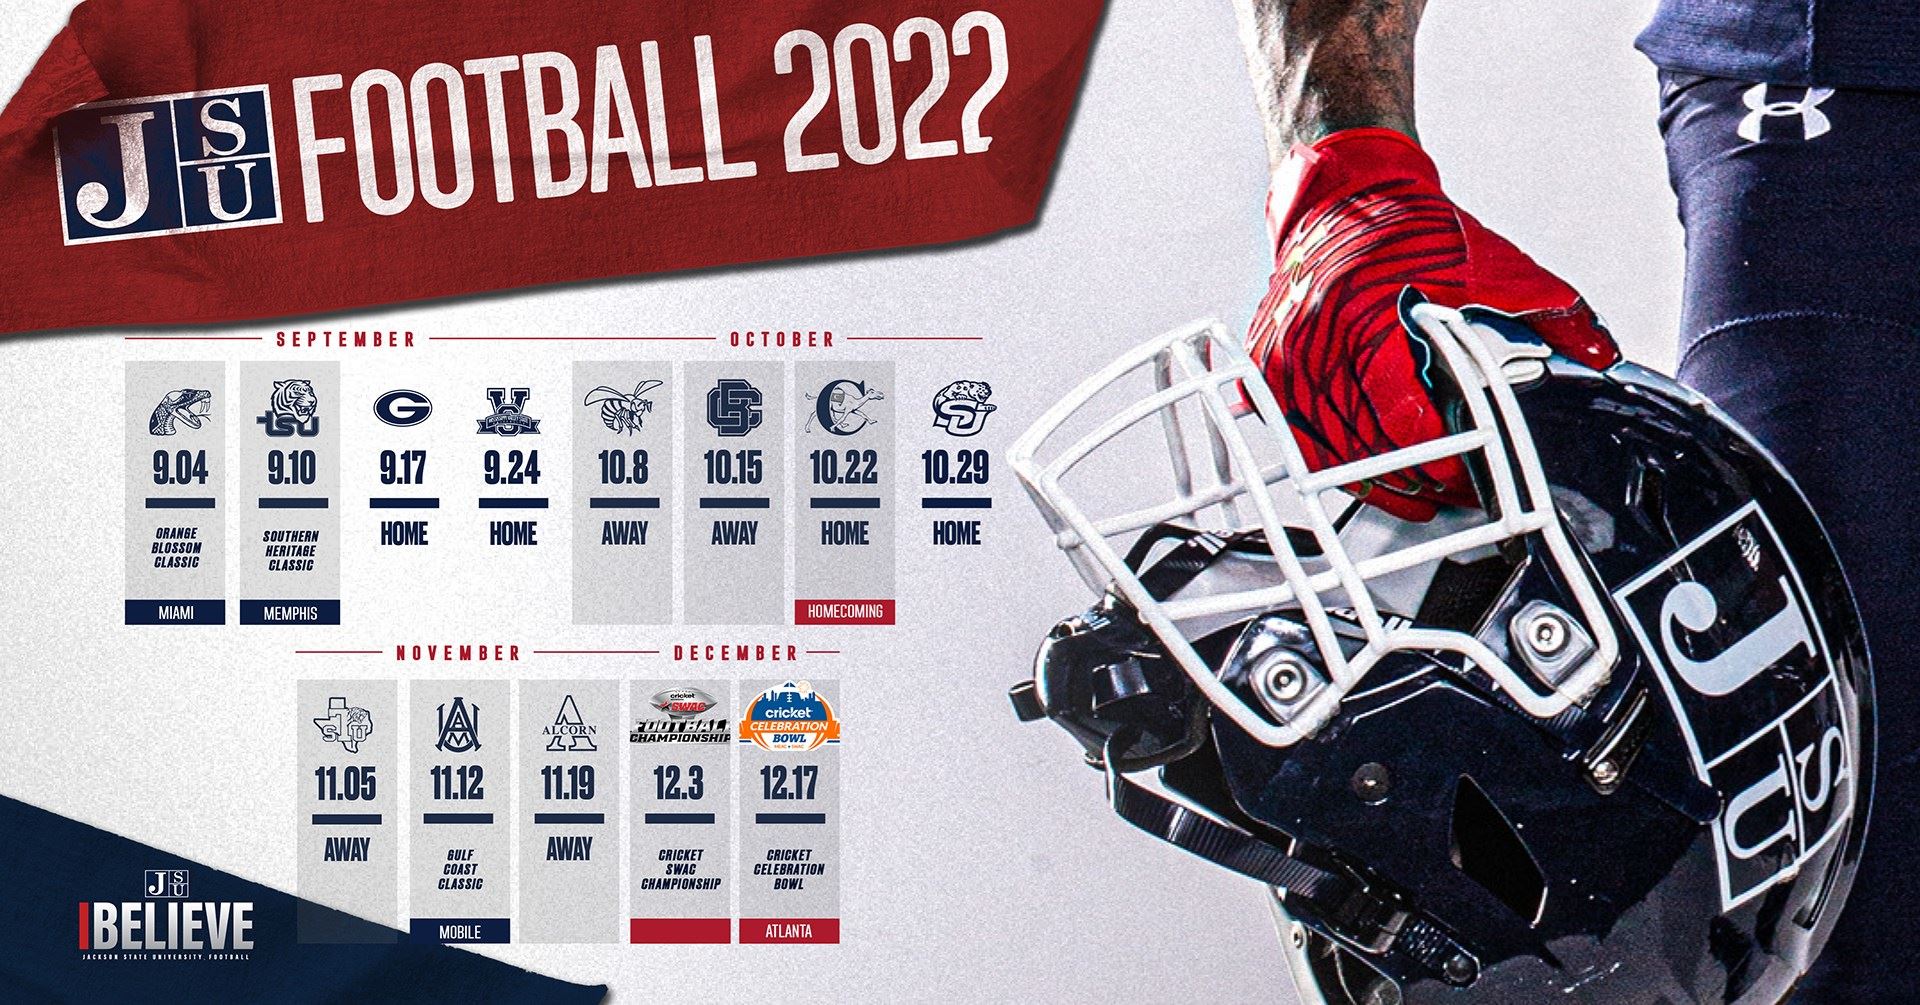 Jsu Football Schedule 2022 Jsu Releases 2022 Football Schedule - Supertalk Mississippi